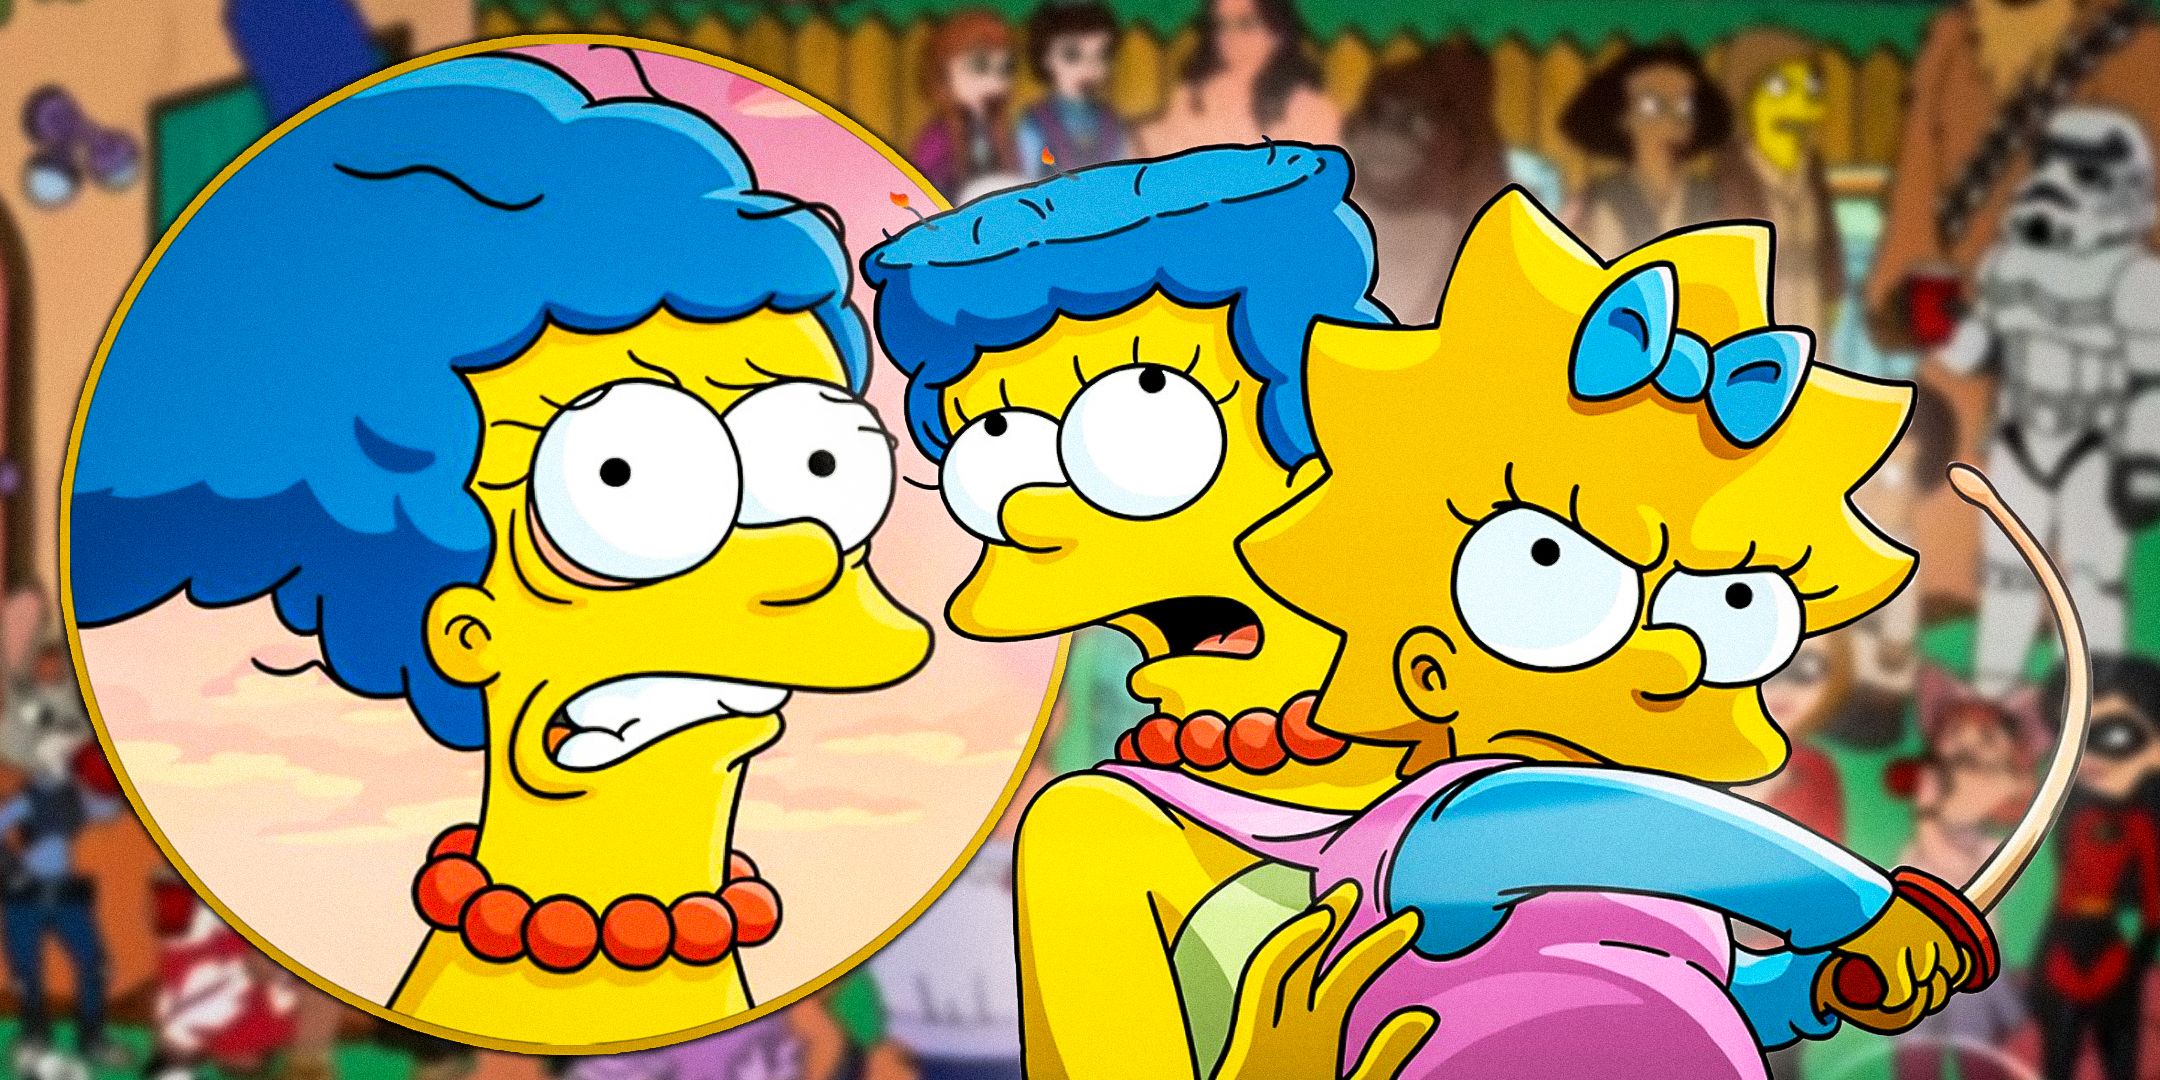 The Simpsons Showrunner Issues Easter Egg-Hunt Challenge To Fans For New Disney+ Mother's Day Short